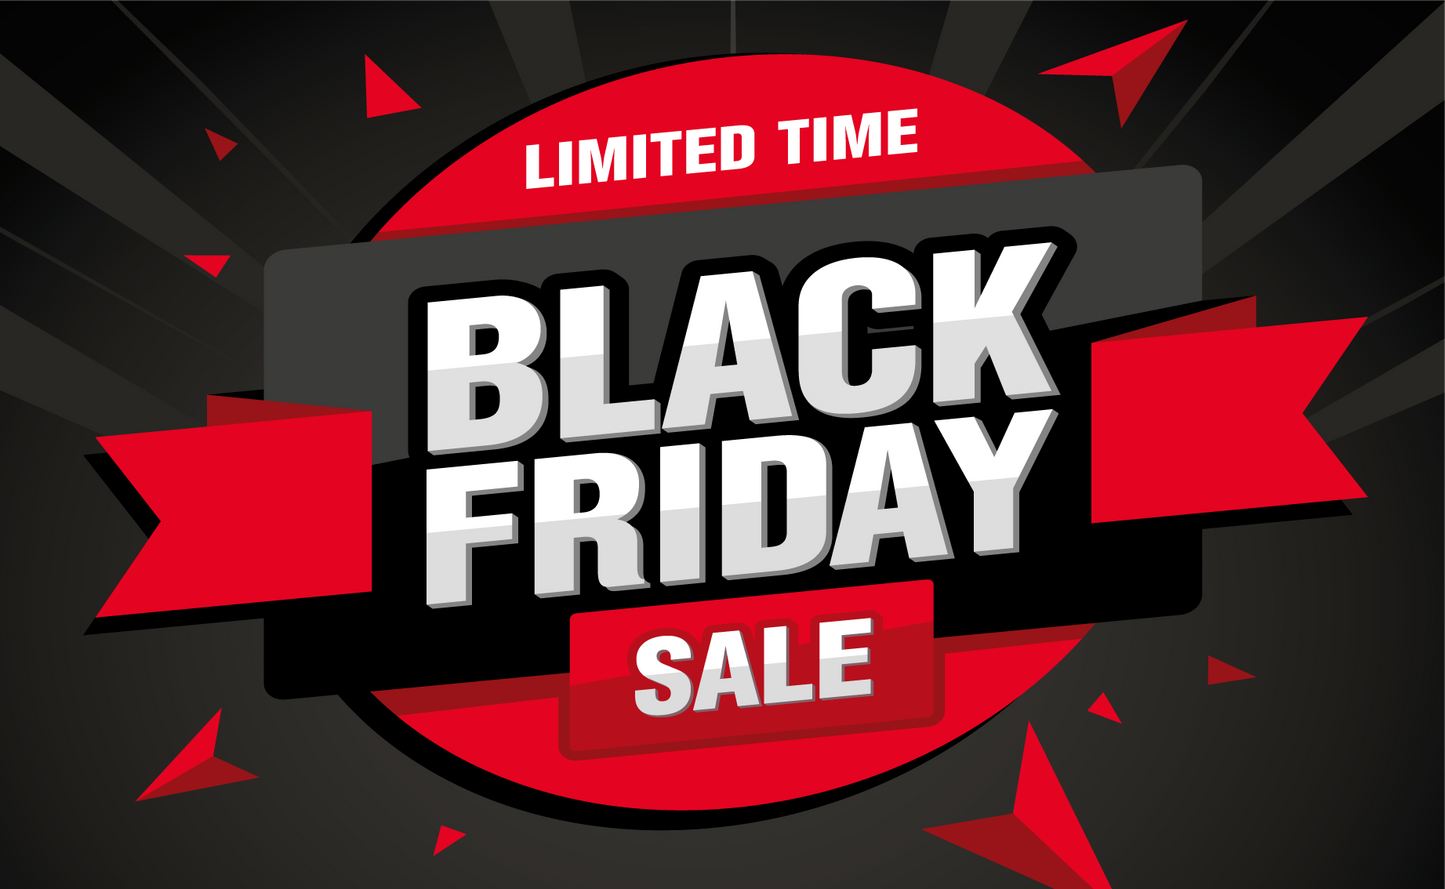 Cartel Black Friday -Limited time sale-